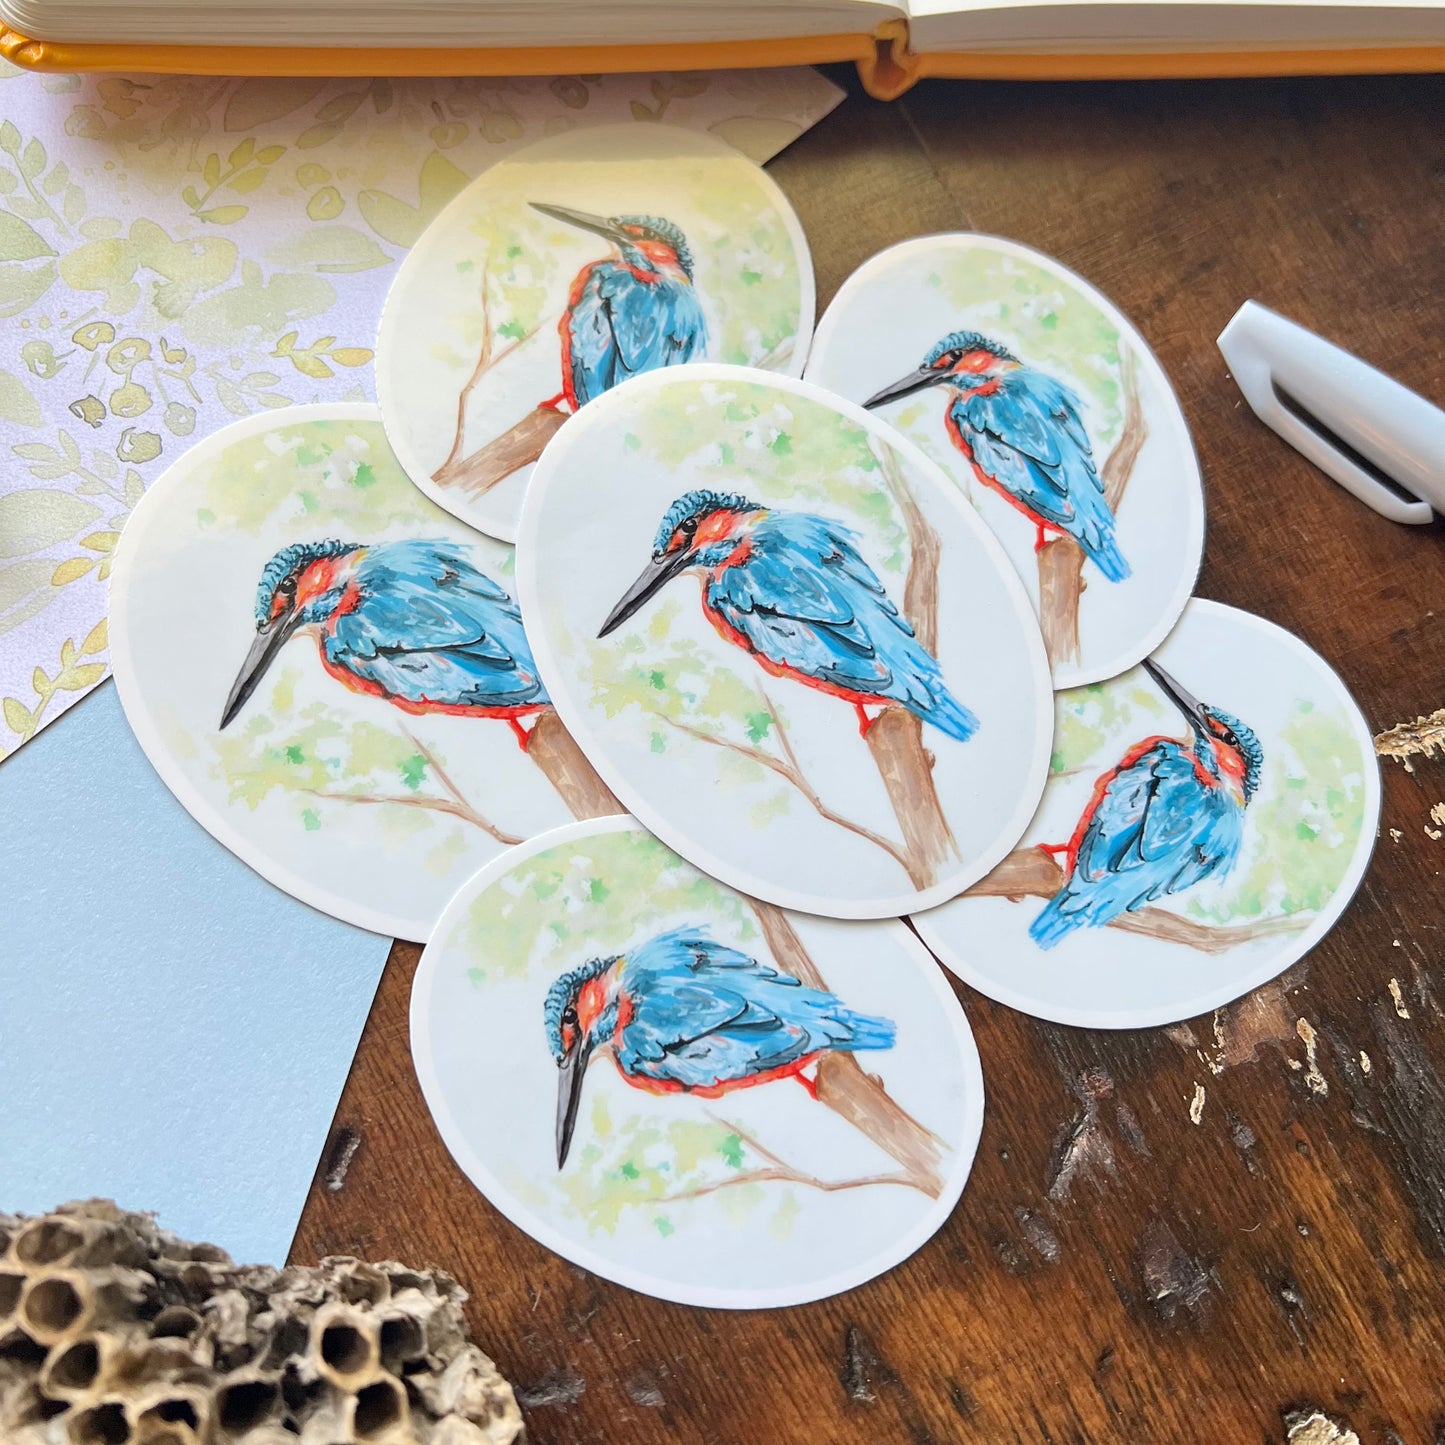 Kingfisher Vinyl Sticker